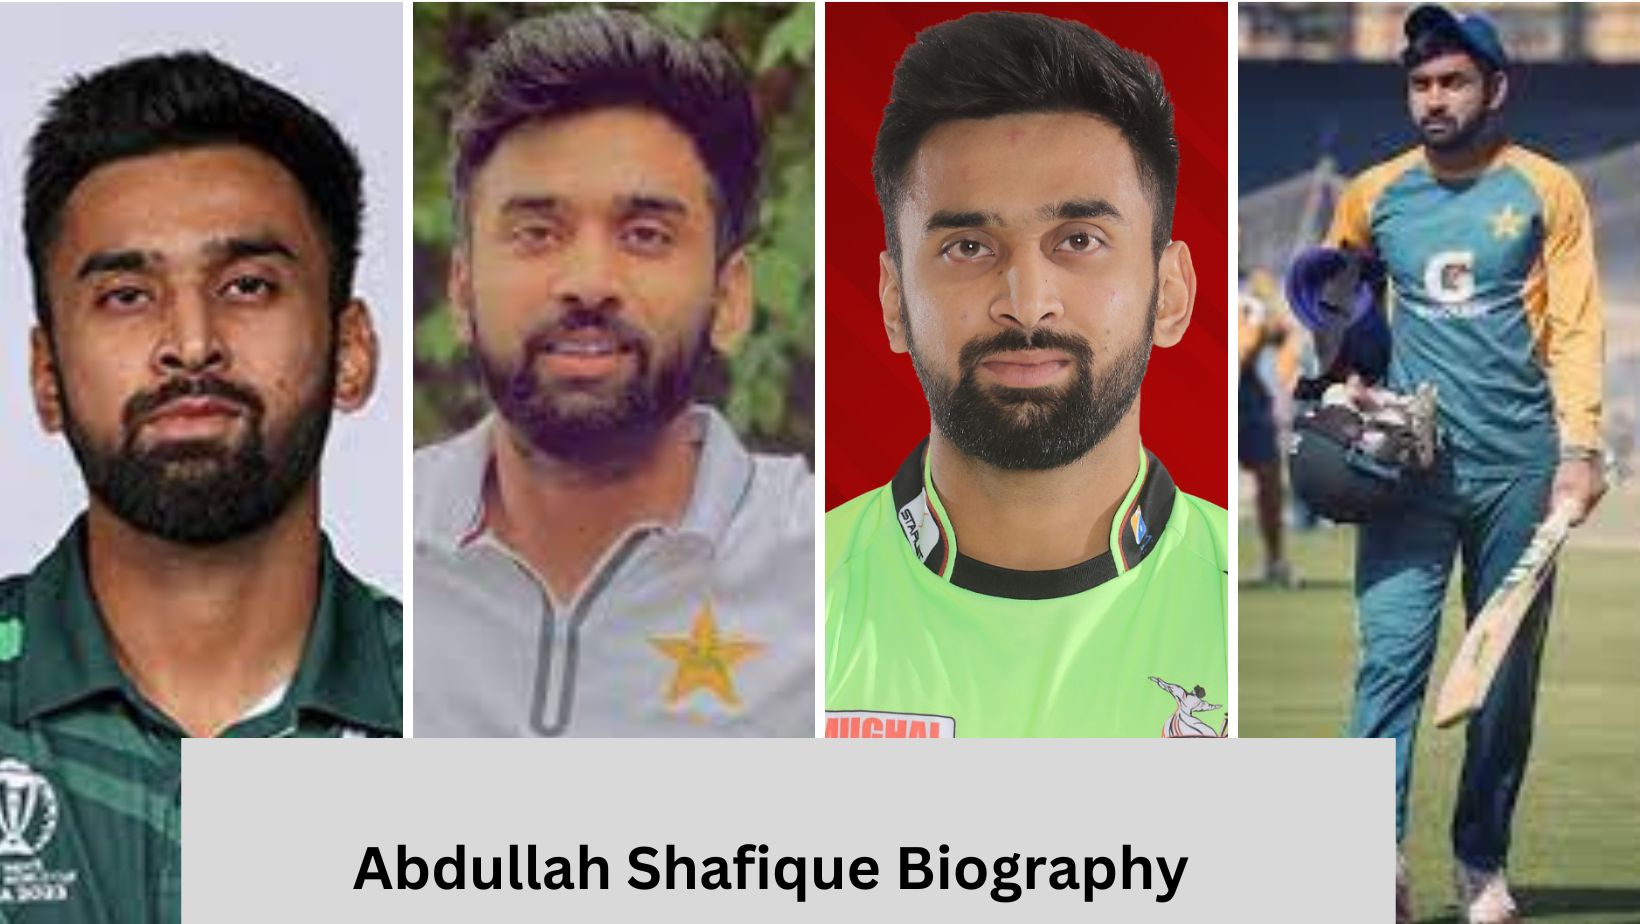 Abdullah Shafique Biography